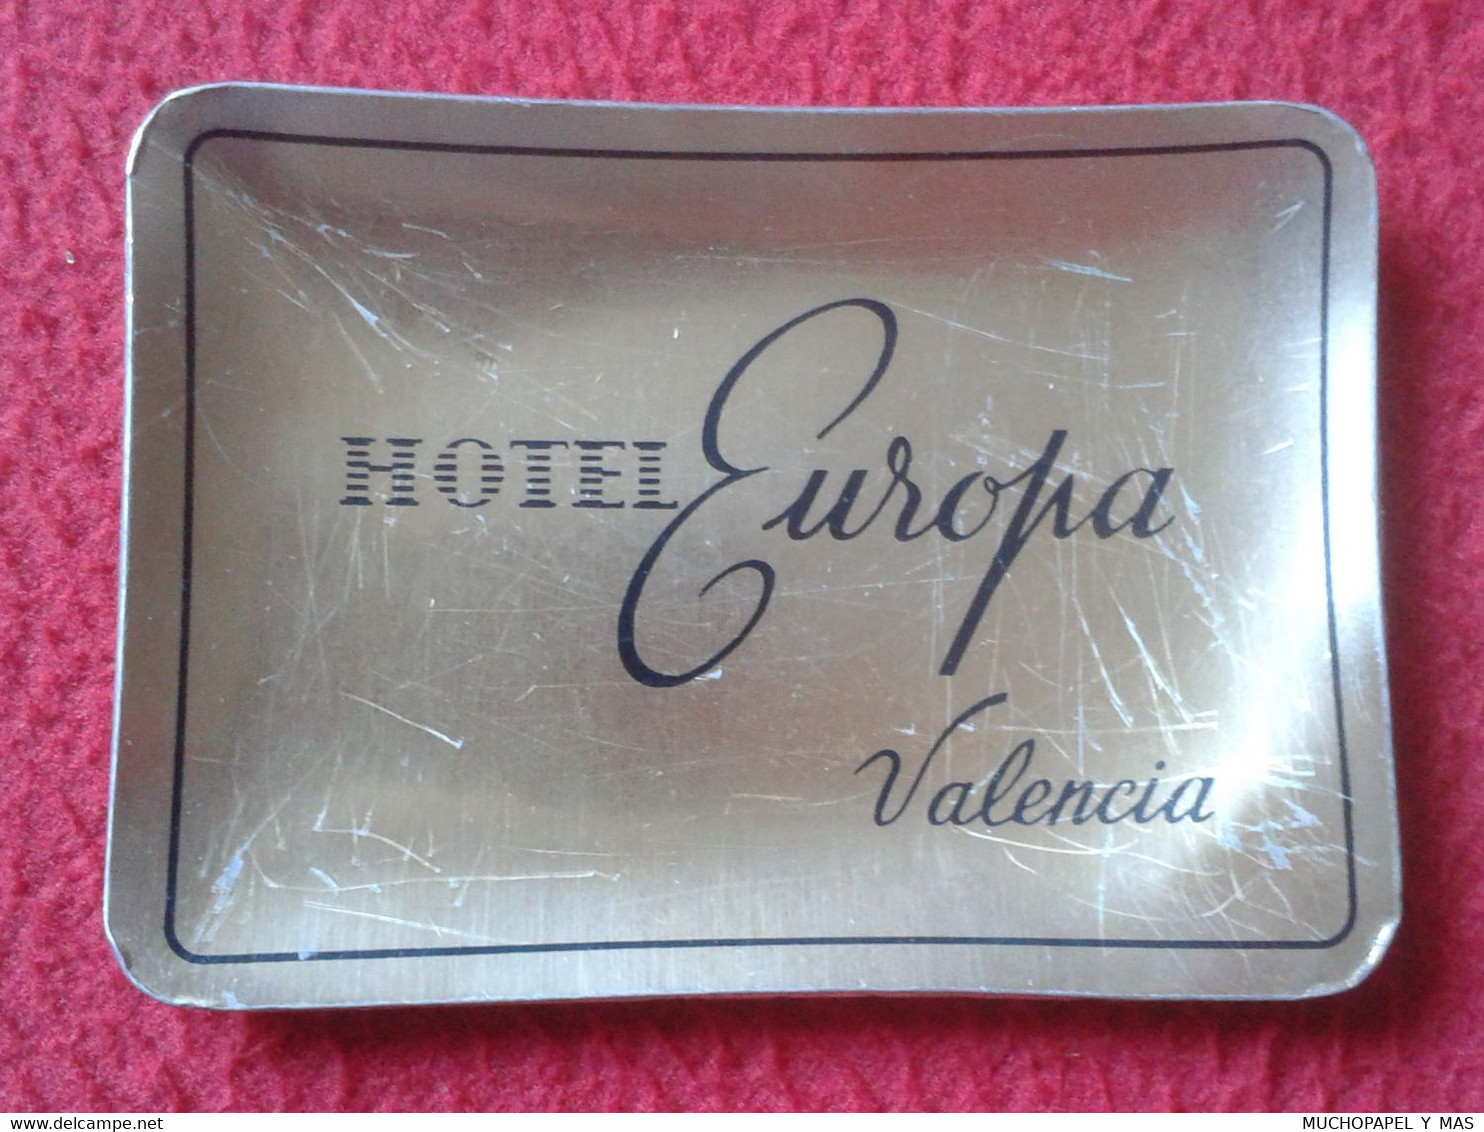 ANTIGUO CENICERO ASHTRAY CENDRIER HOTEL EUROPA VALENCIA ESPAÑA SPAIN MATERIAL TIPO ALUMINIO O SIMIL ASCHENBECHER ESPAGNE - Métal